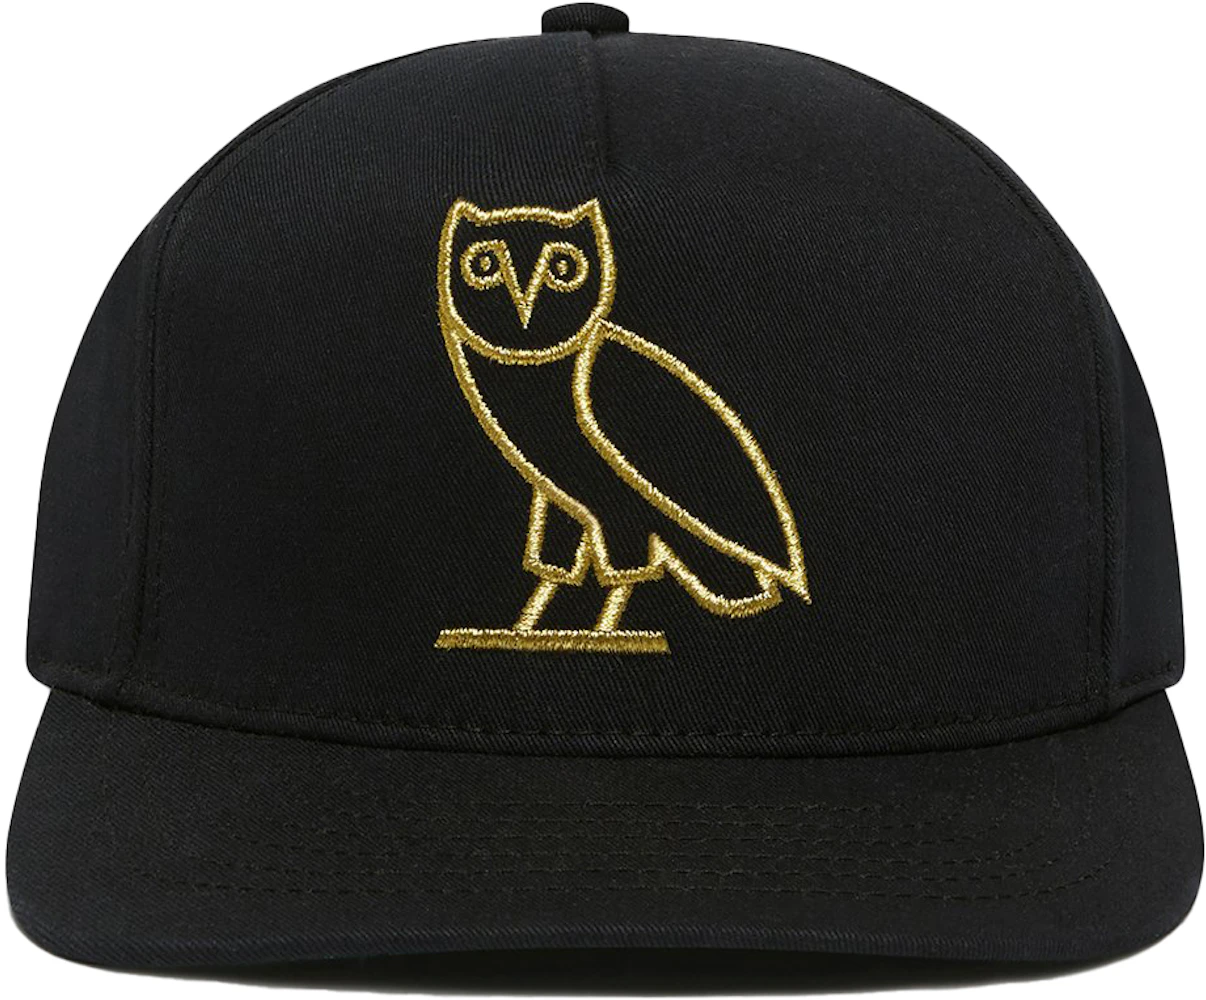 Limited Gucci Classic Color Air Jordan 11 - Owl Fashion Shop